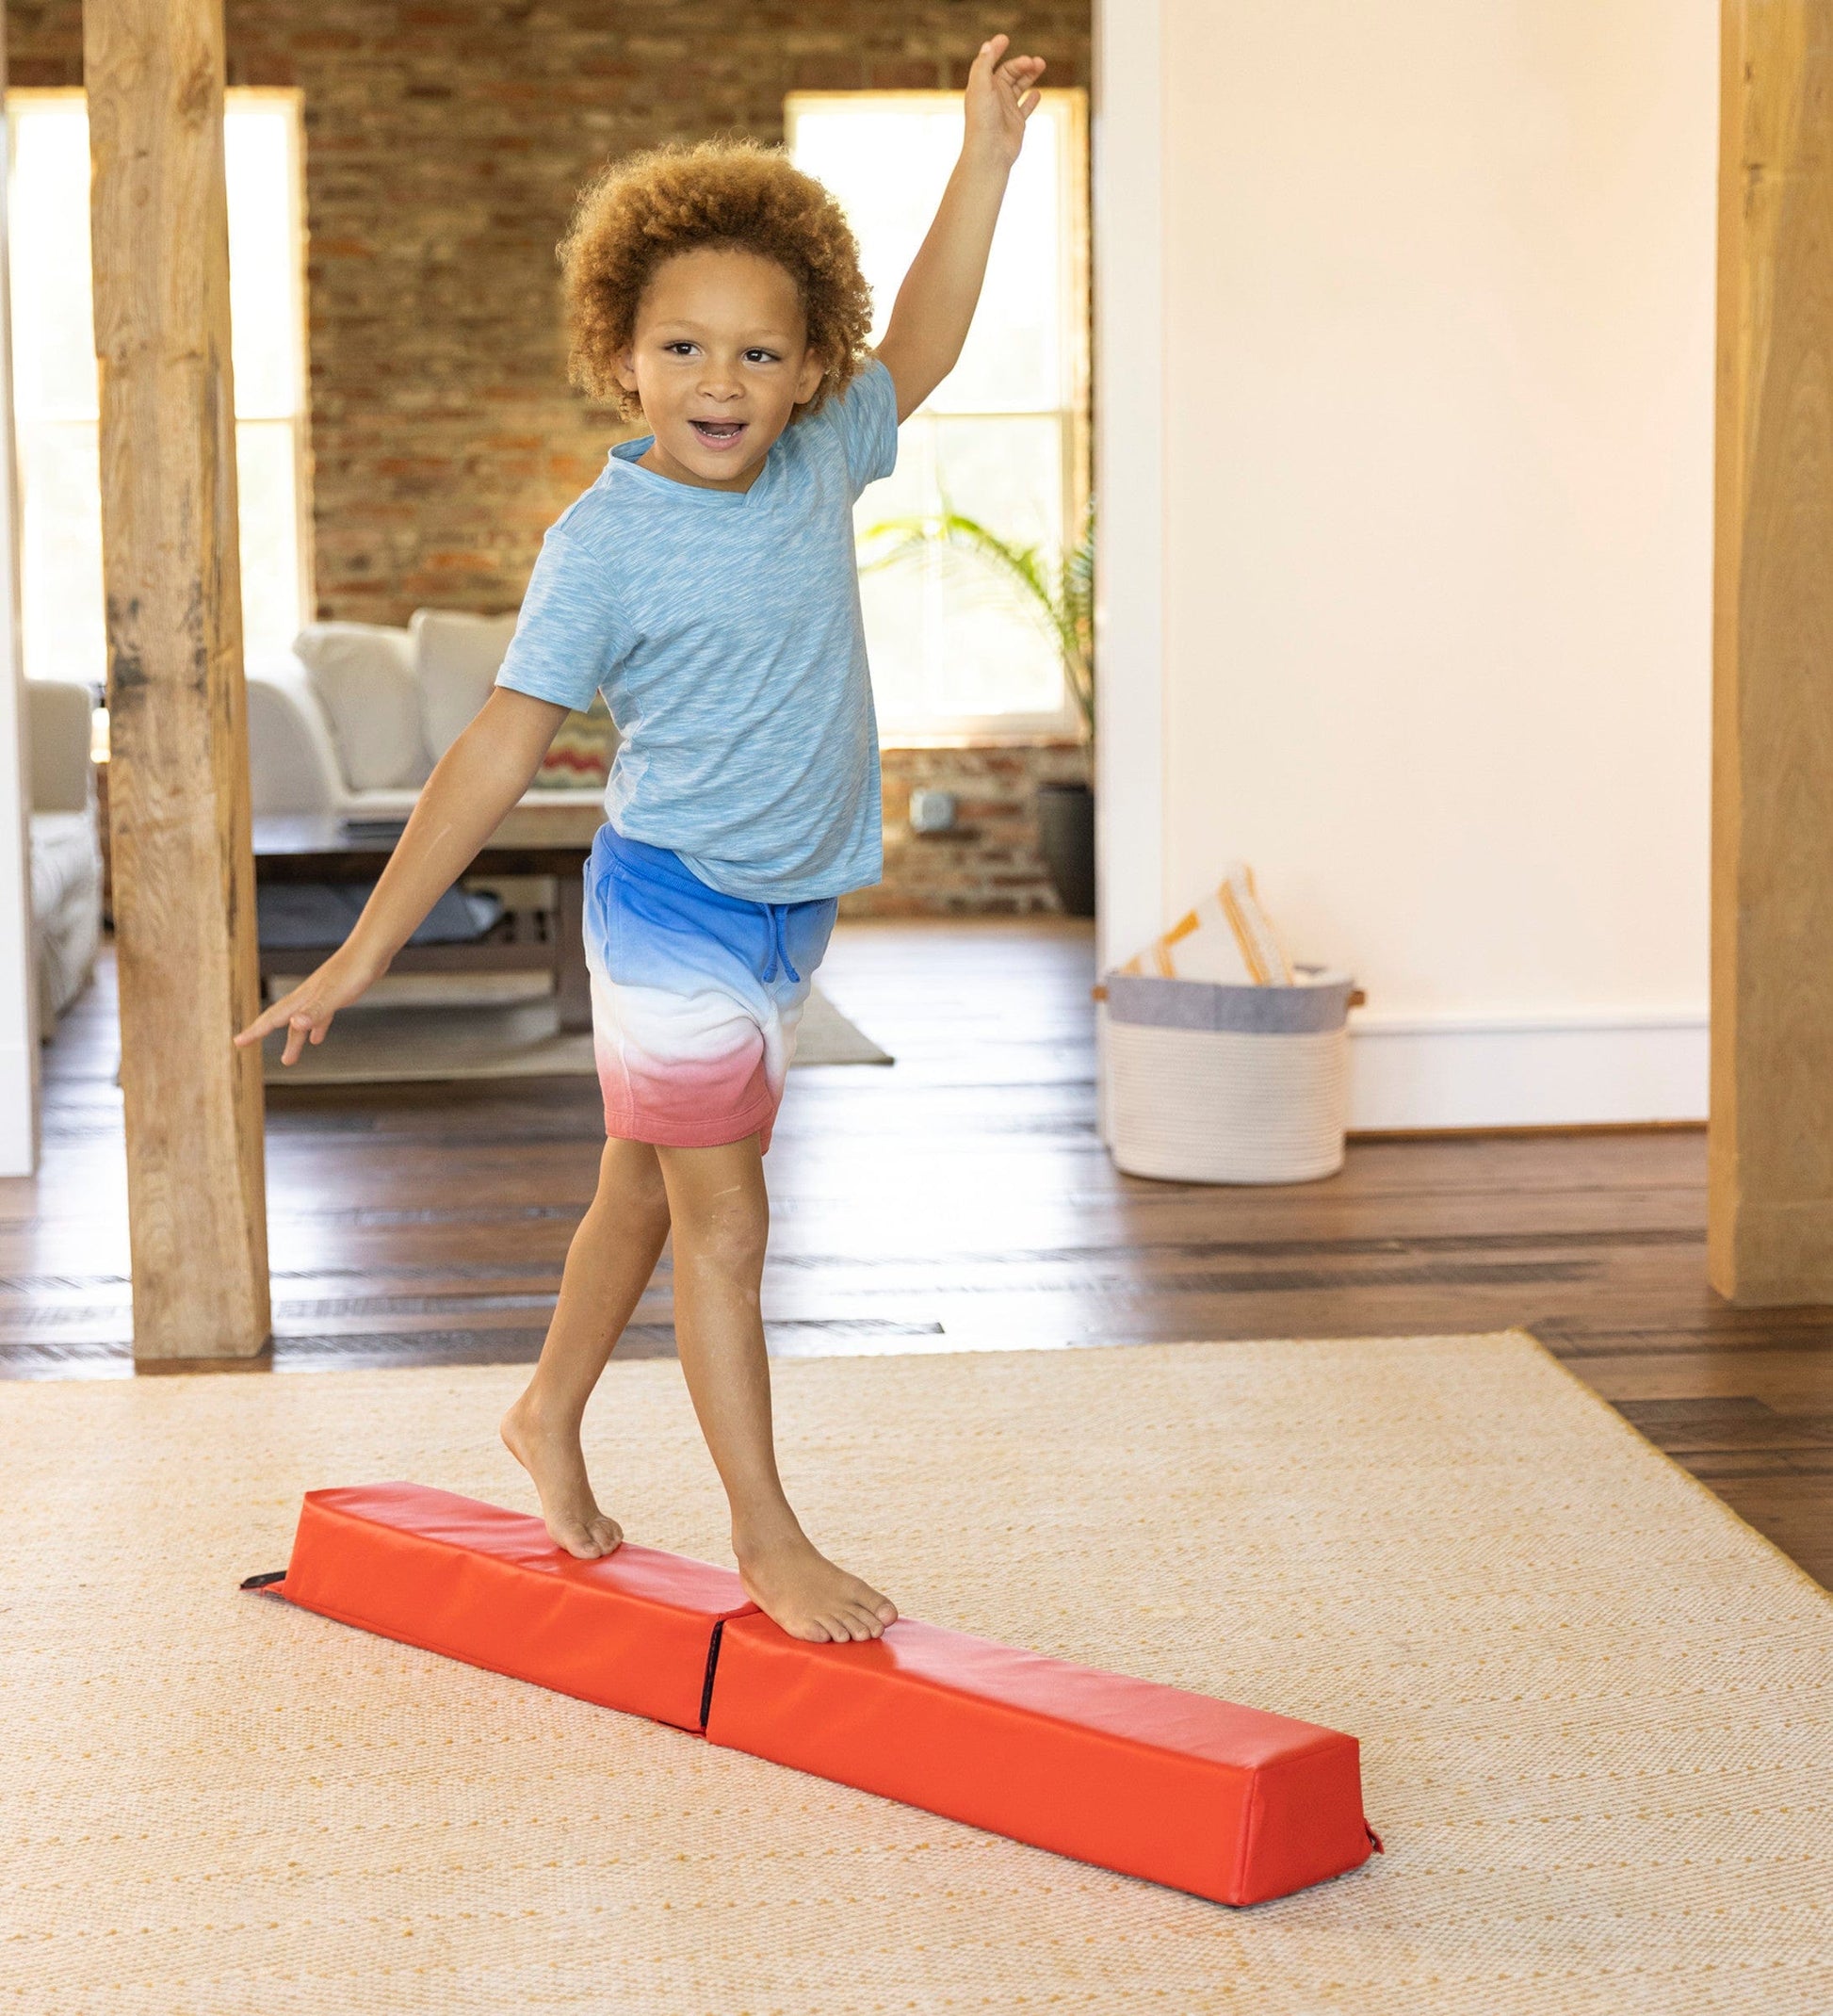 Technogym Balance Pad: Foam exercise balance pad for core stability